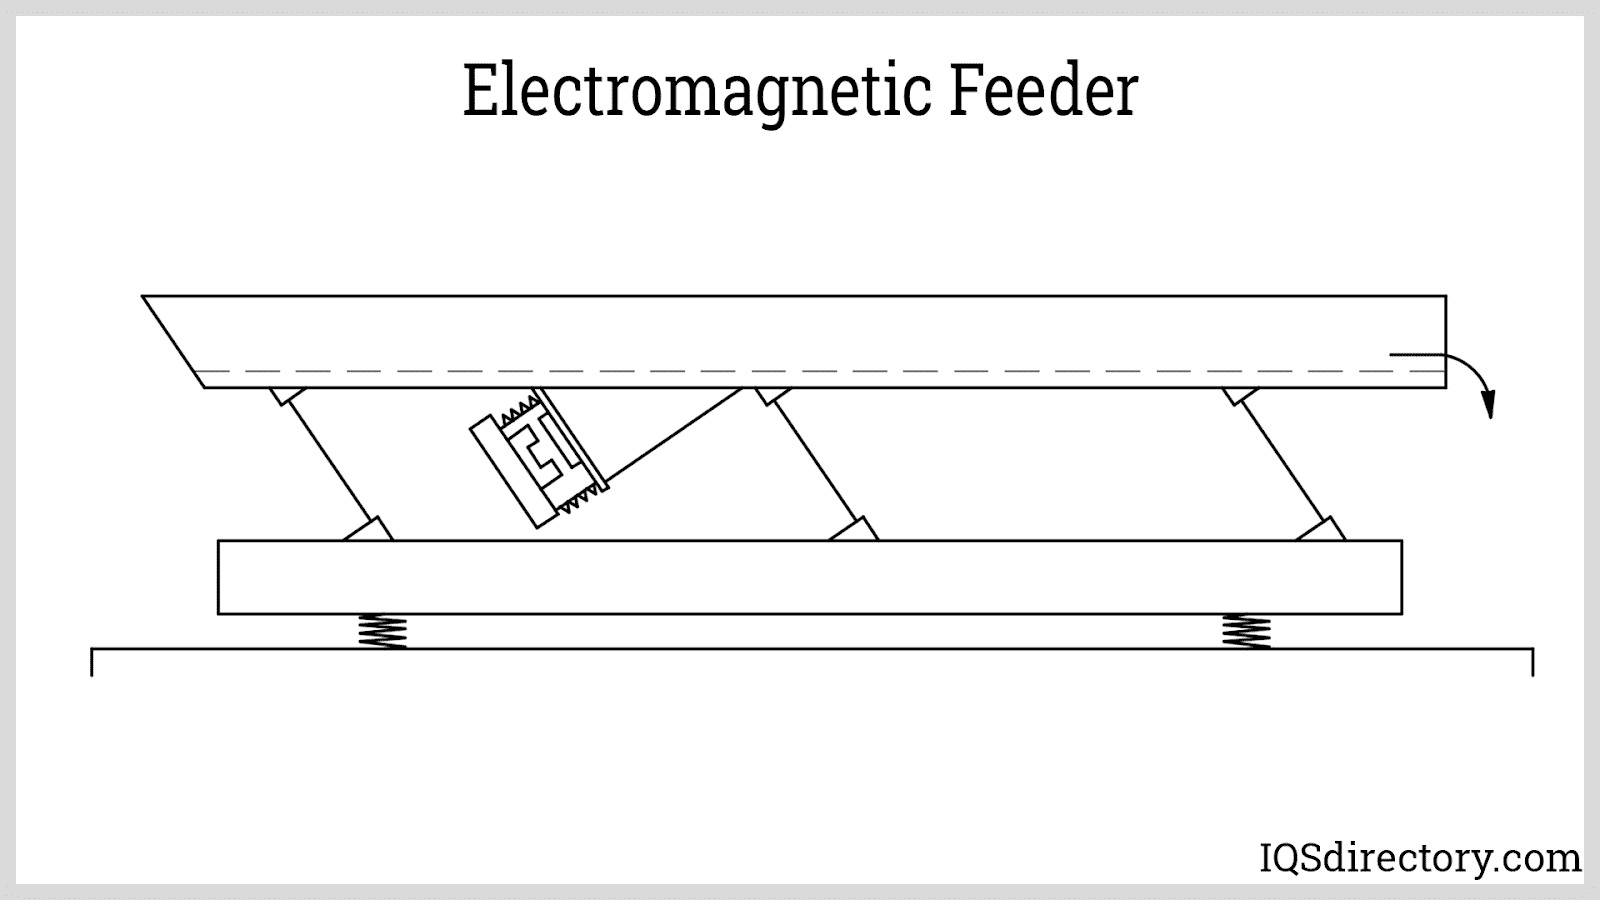 Electromagnetic Feeder